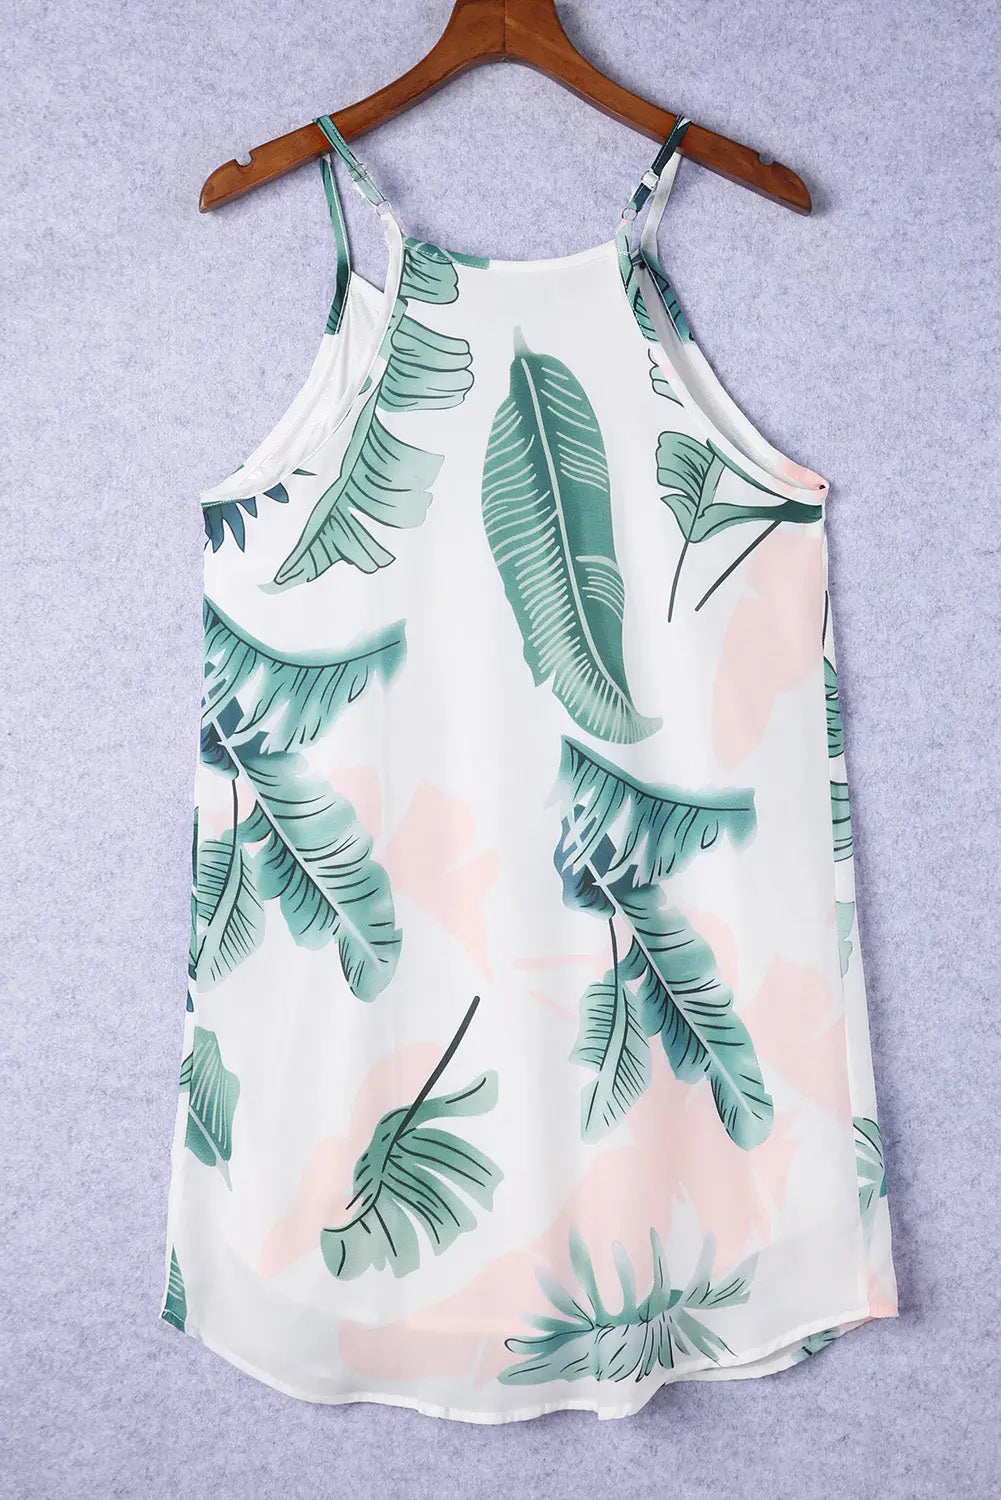 Palm tree leaf print ivory sleeveless dress - floral dresses